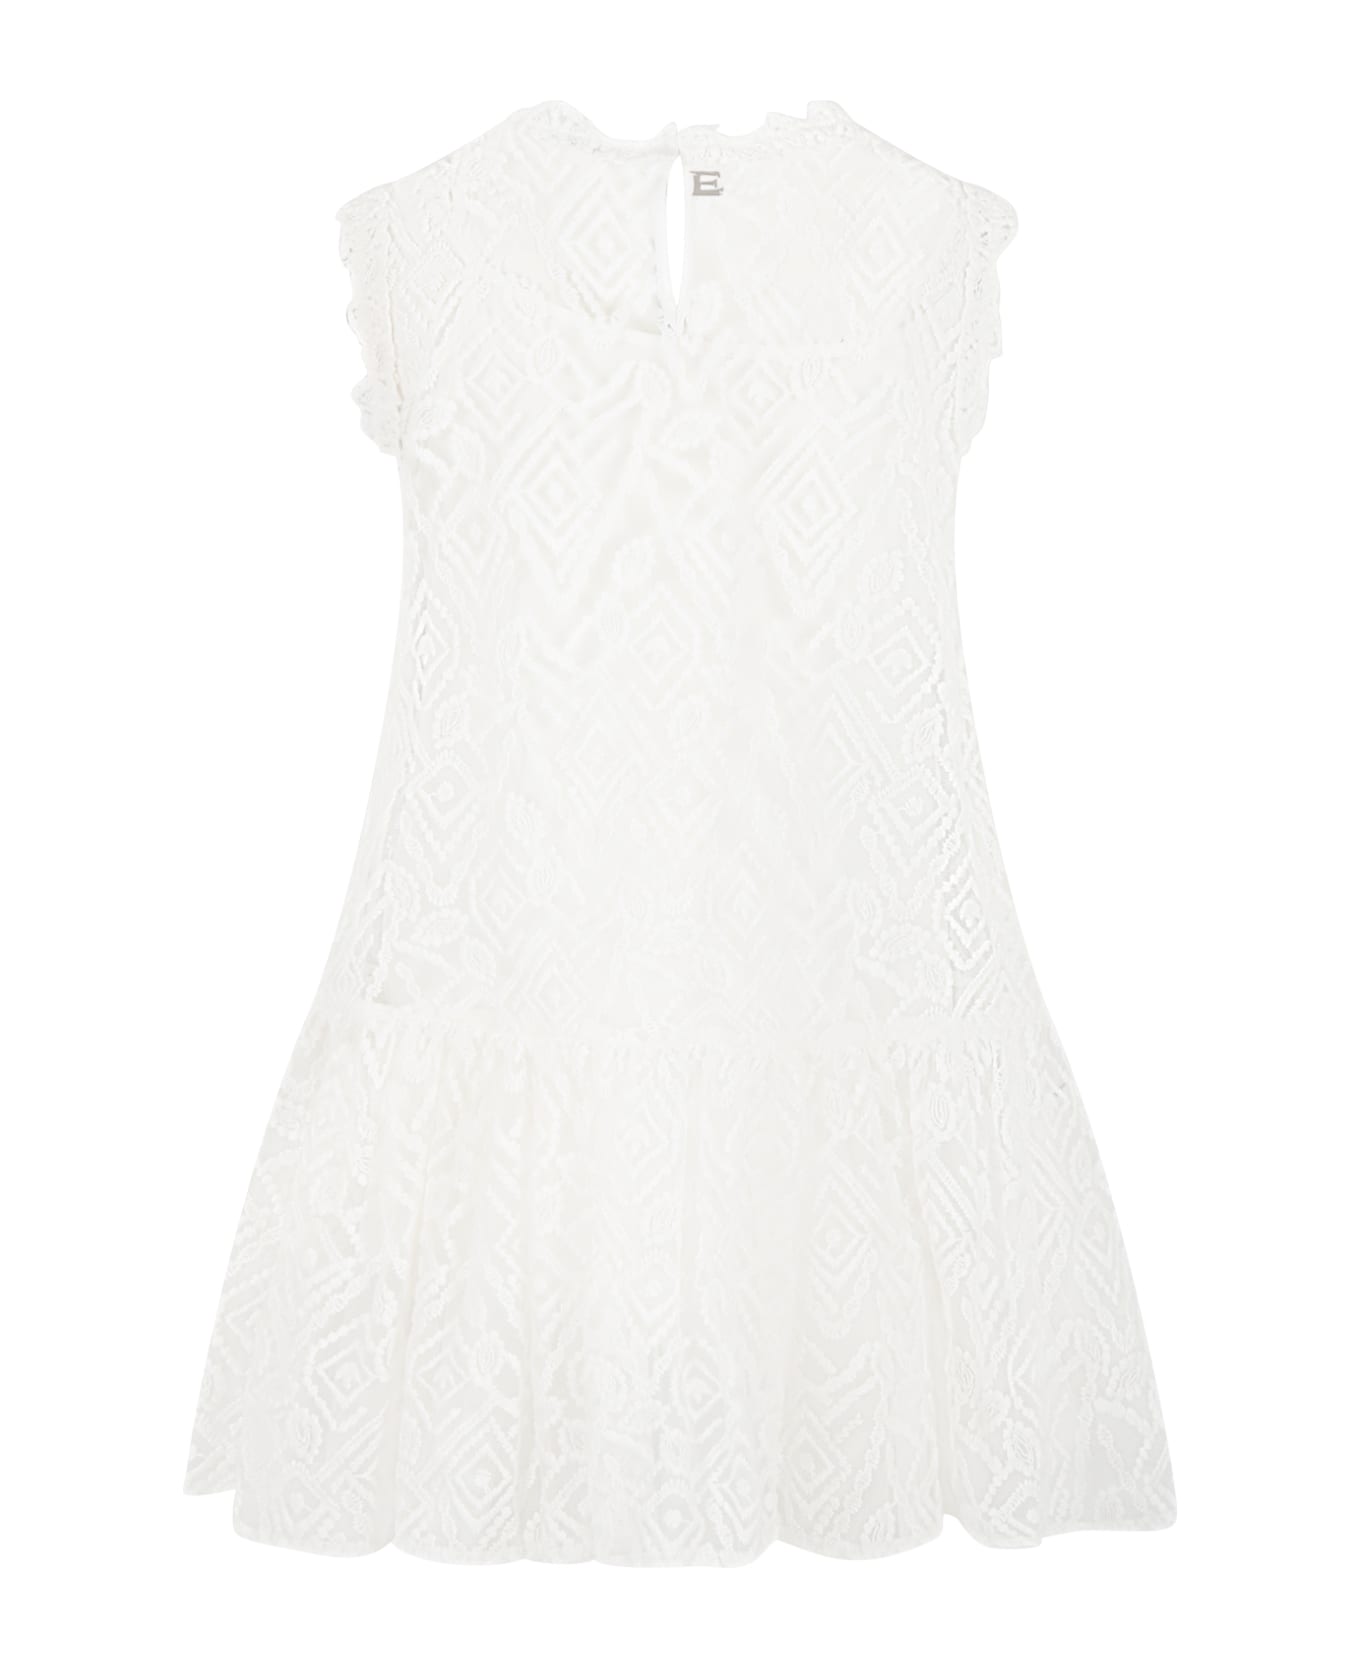 Ermanno Scervino Junior White Dress For Girl With Logo - White